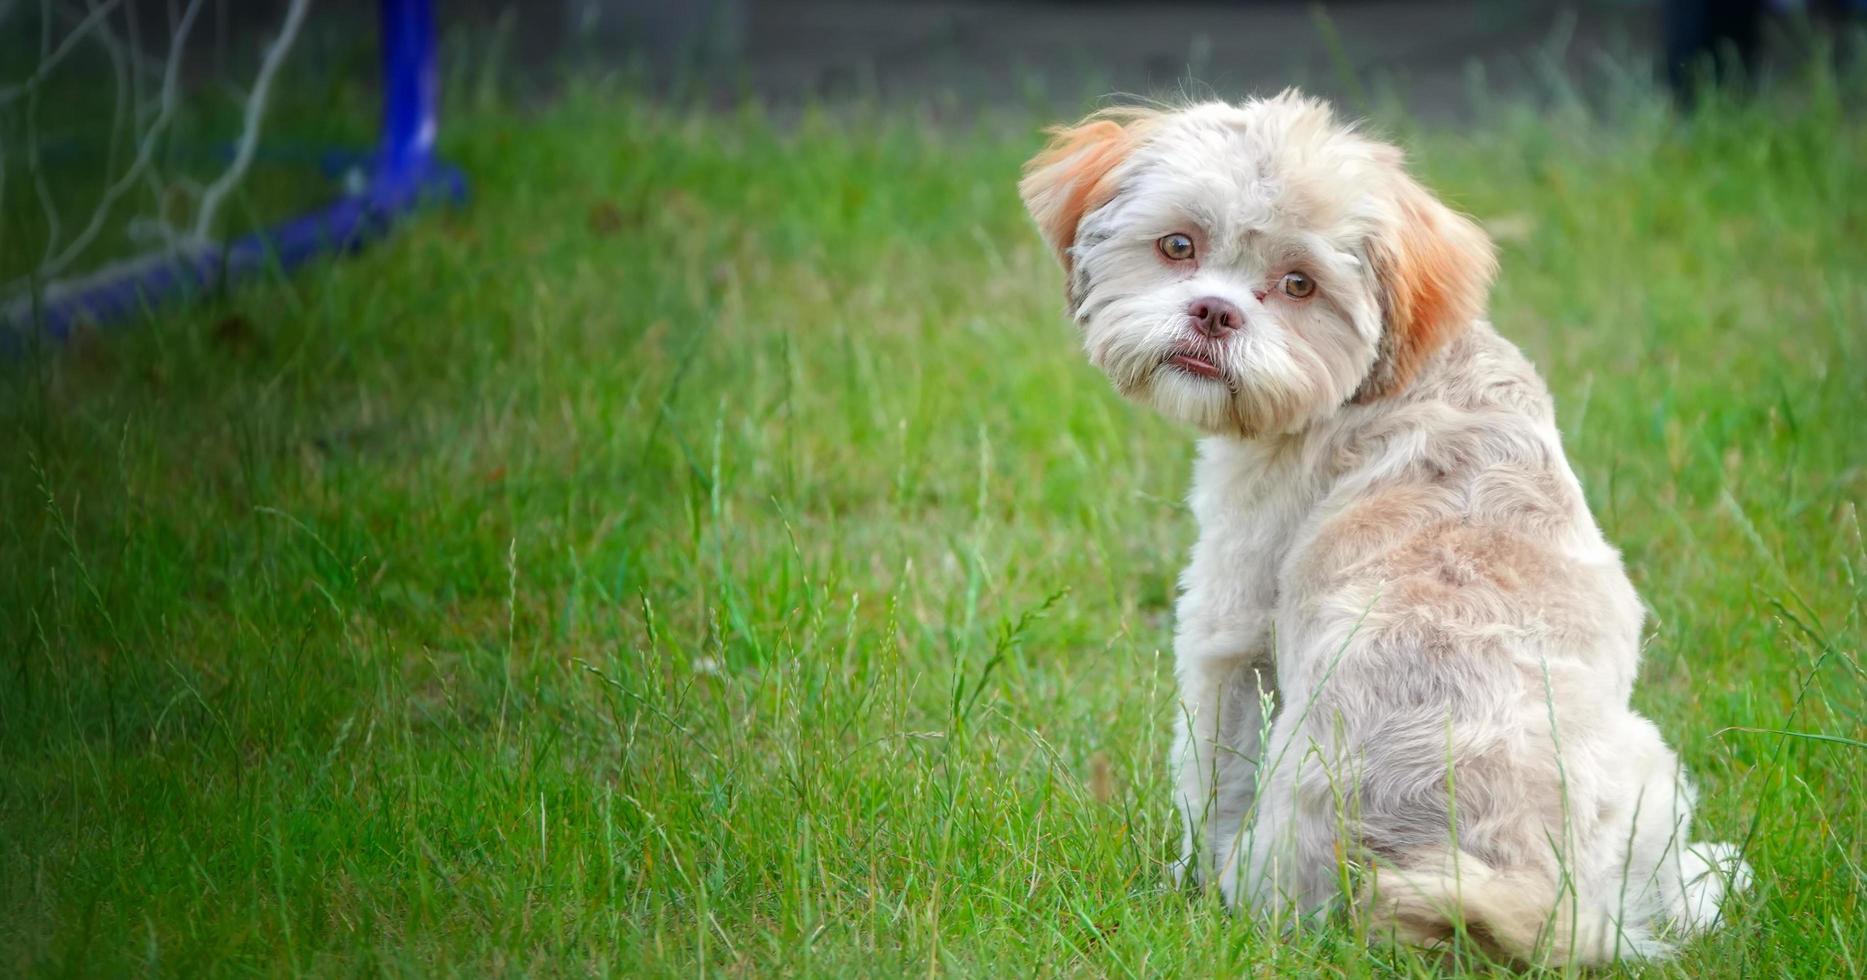 Sweet Cute Dog on Green Grass photo